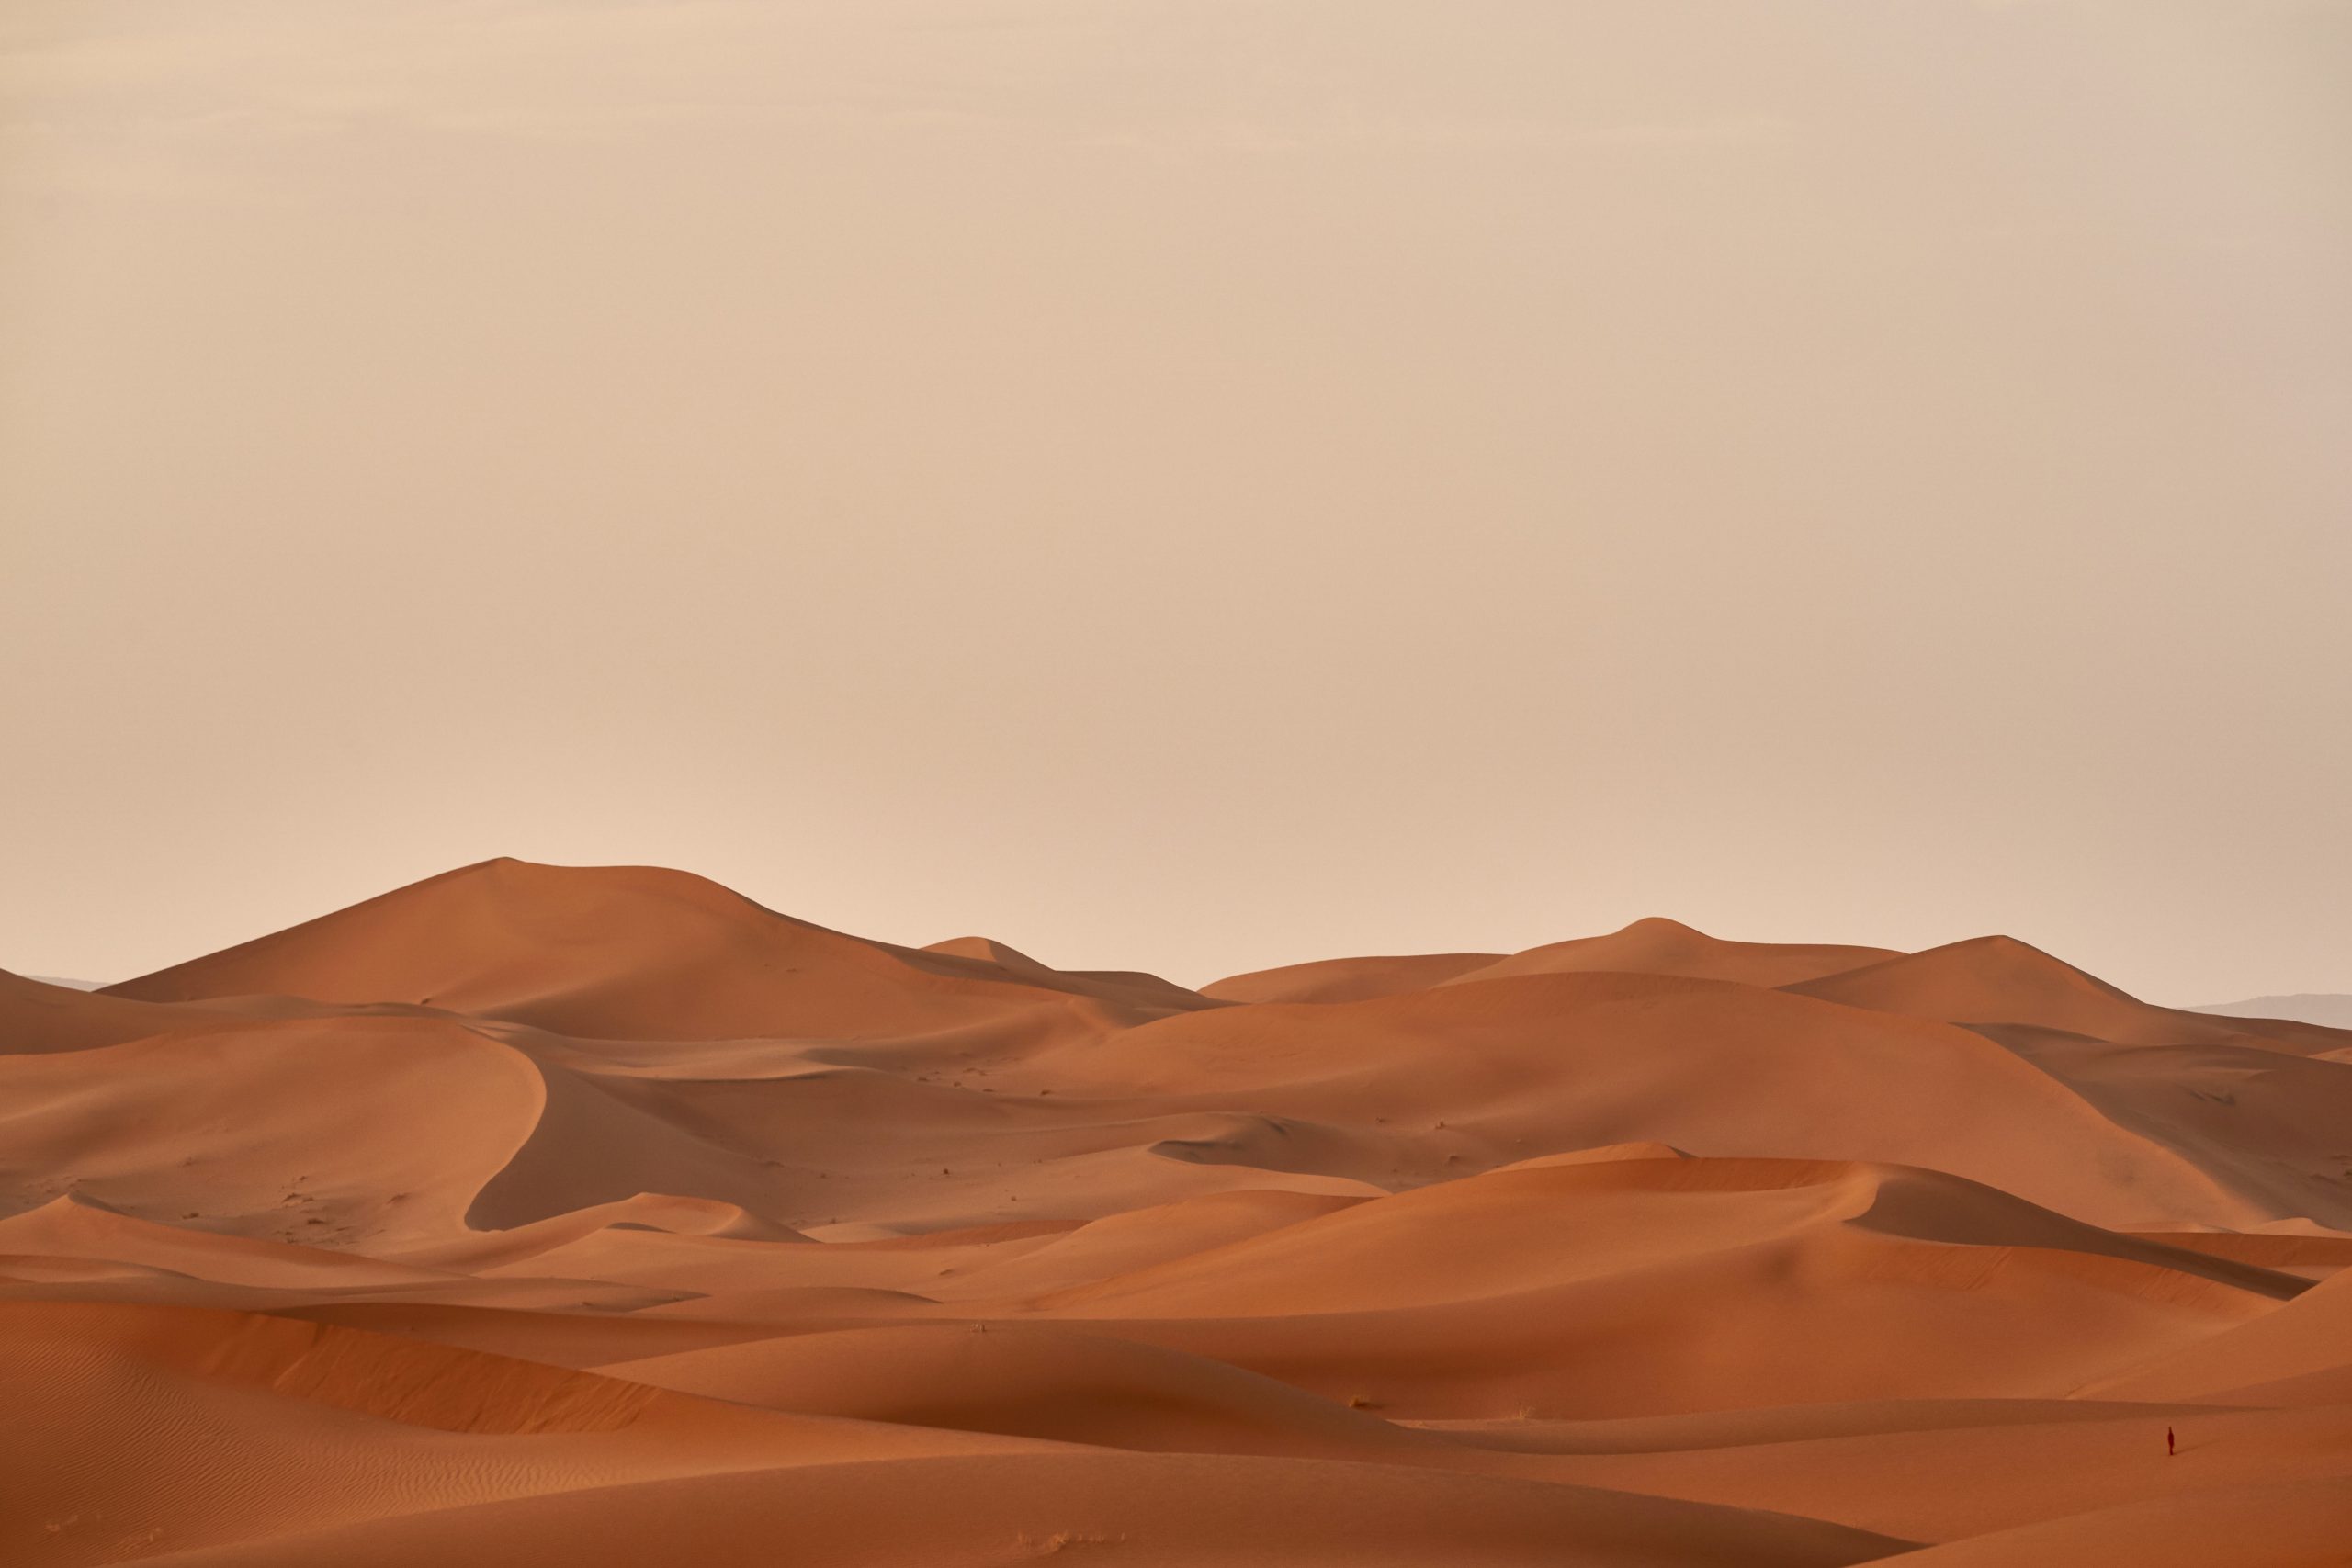 Encapsulation of remarkable dunes in a Desert!